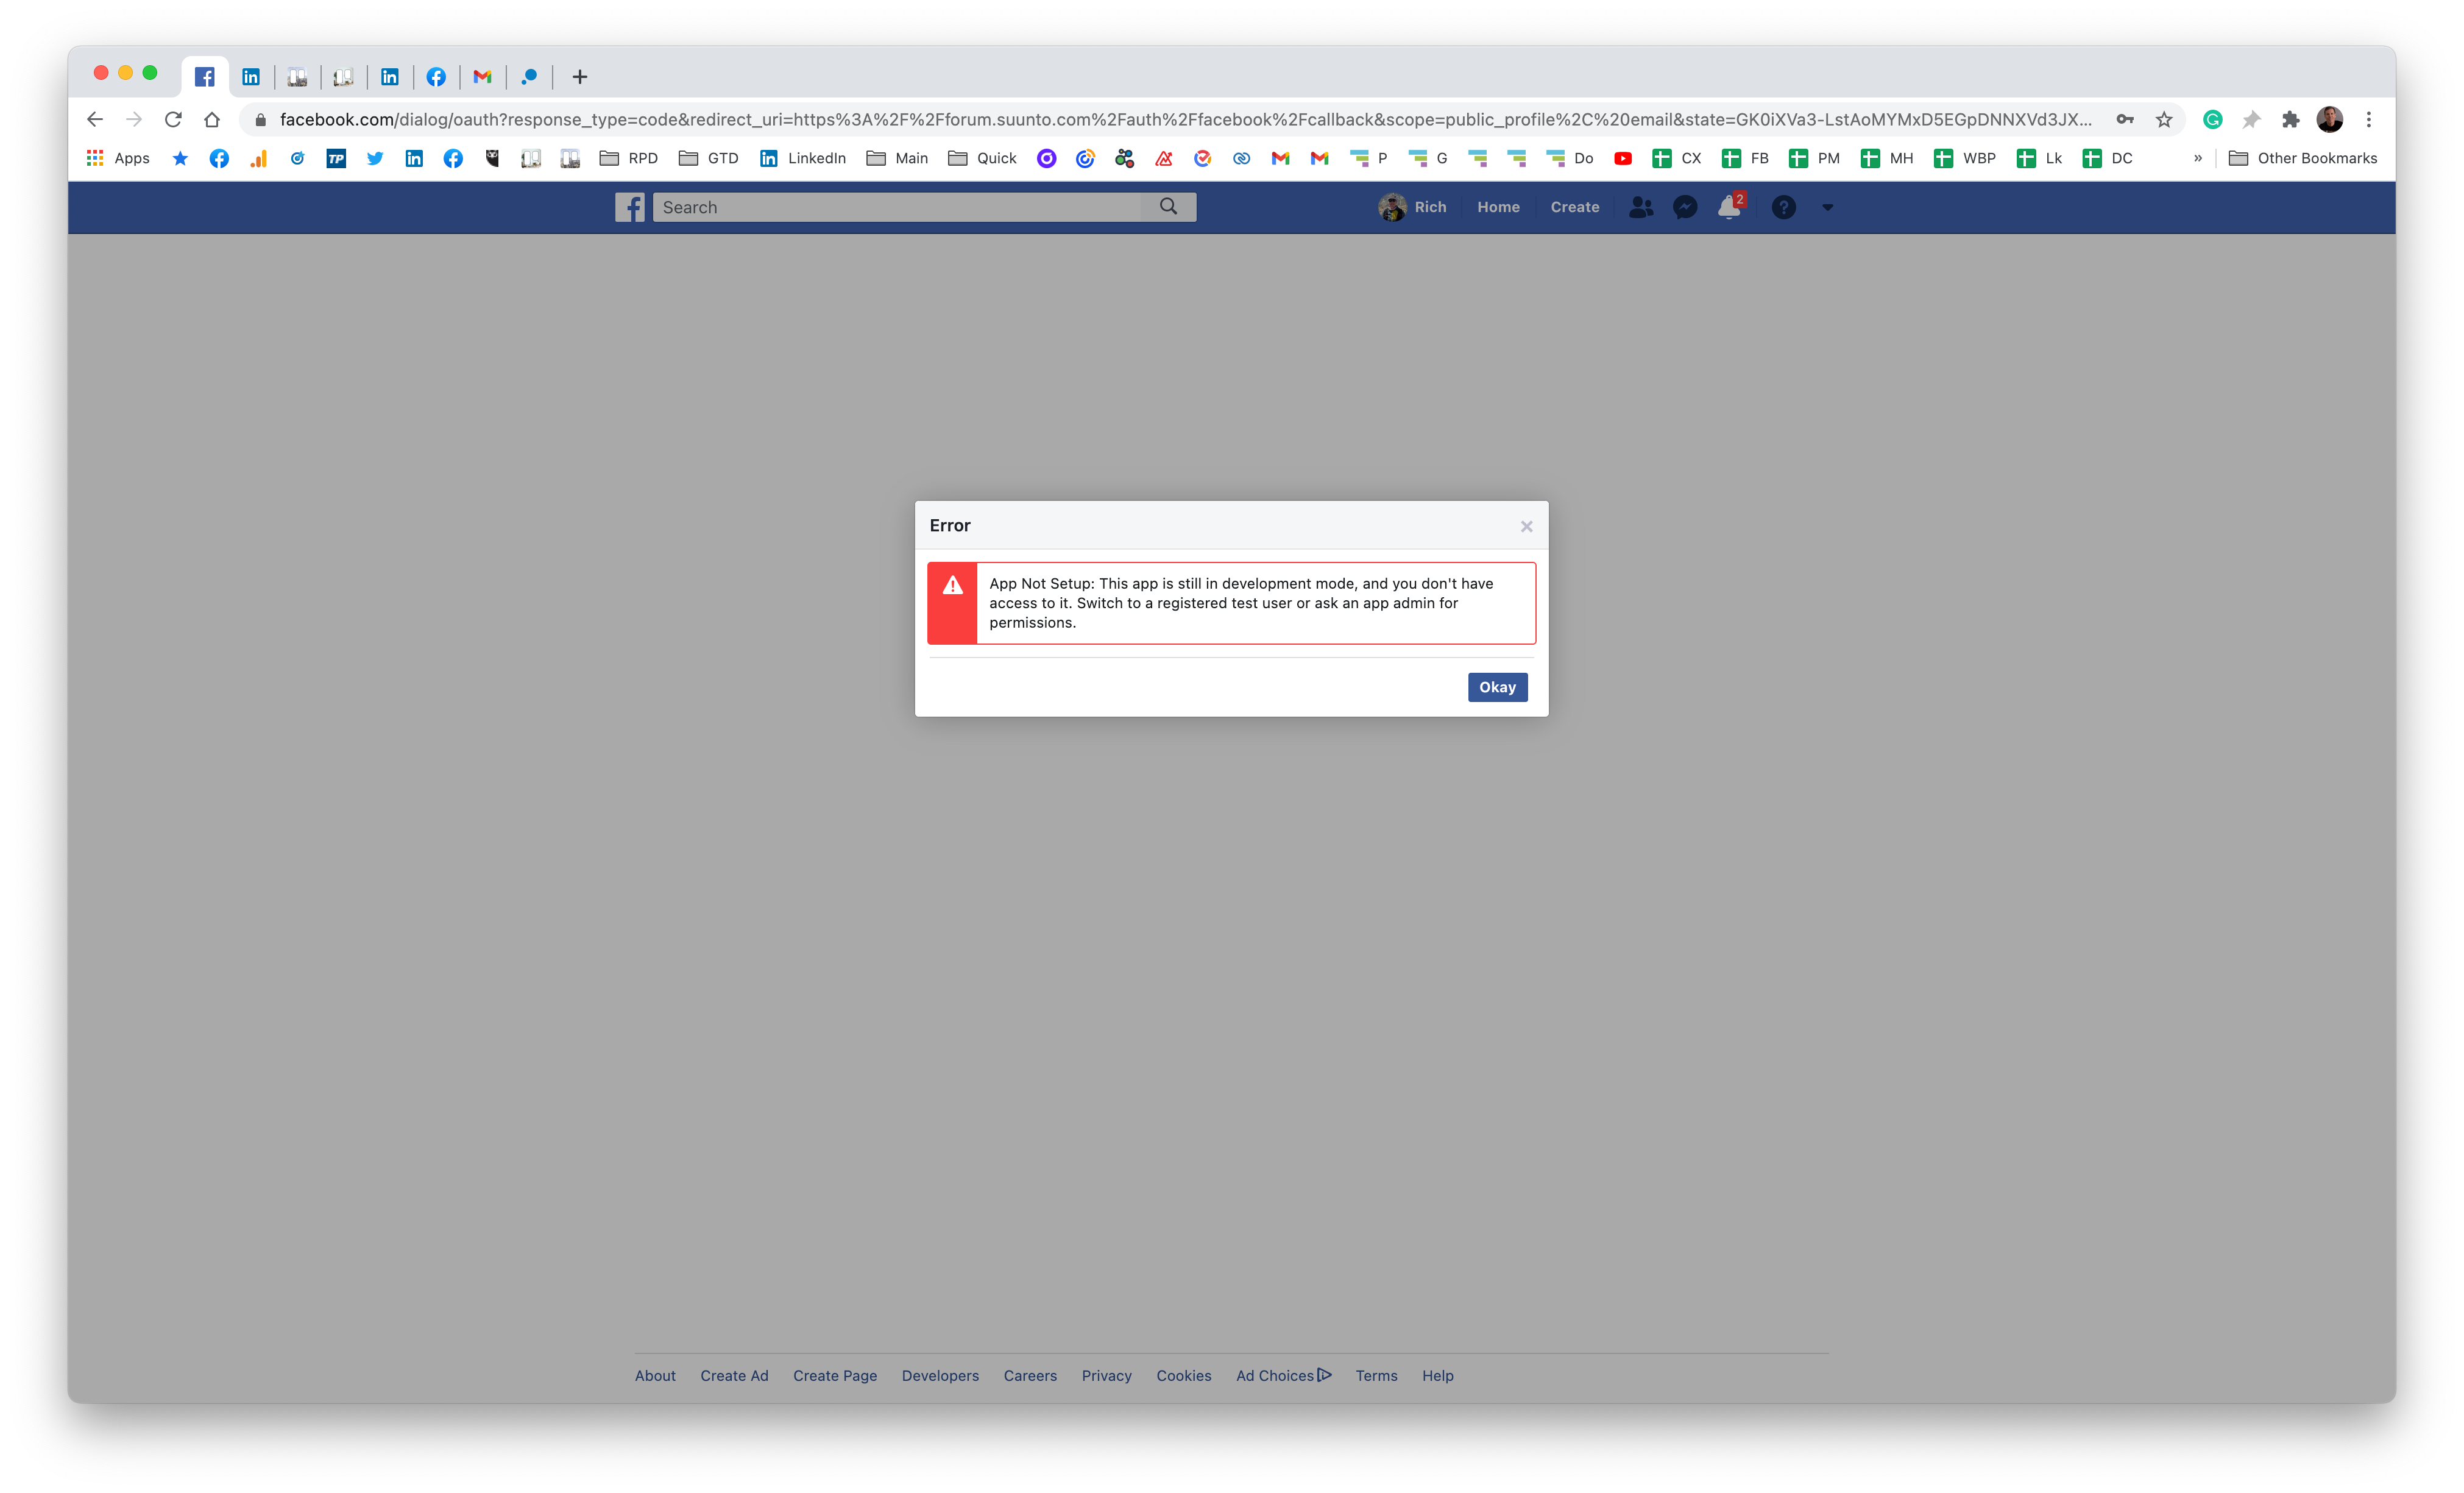 Facebook error App not setup still in development mode